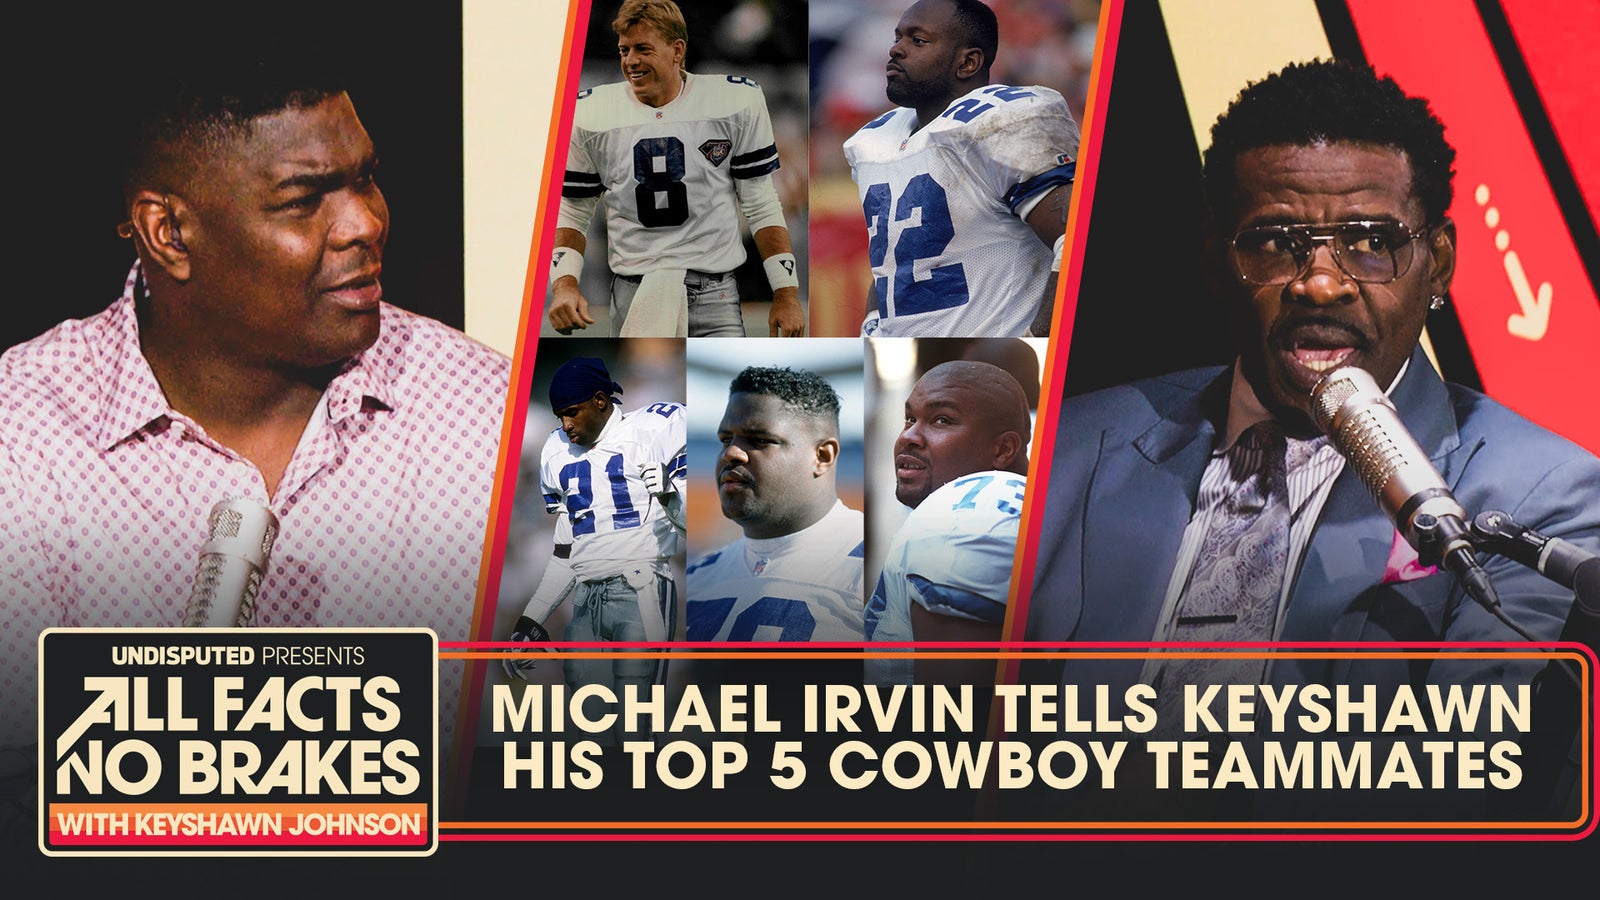 Michael Irvin reveals his Top 5 Dallas Cowboys teammates